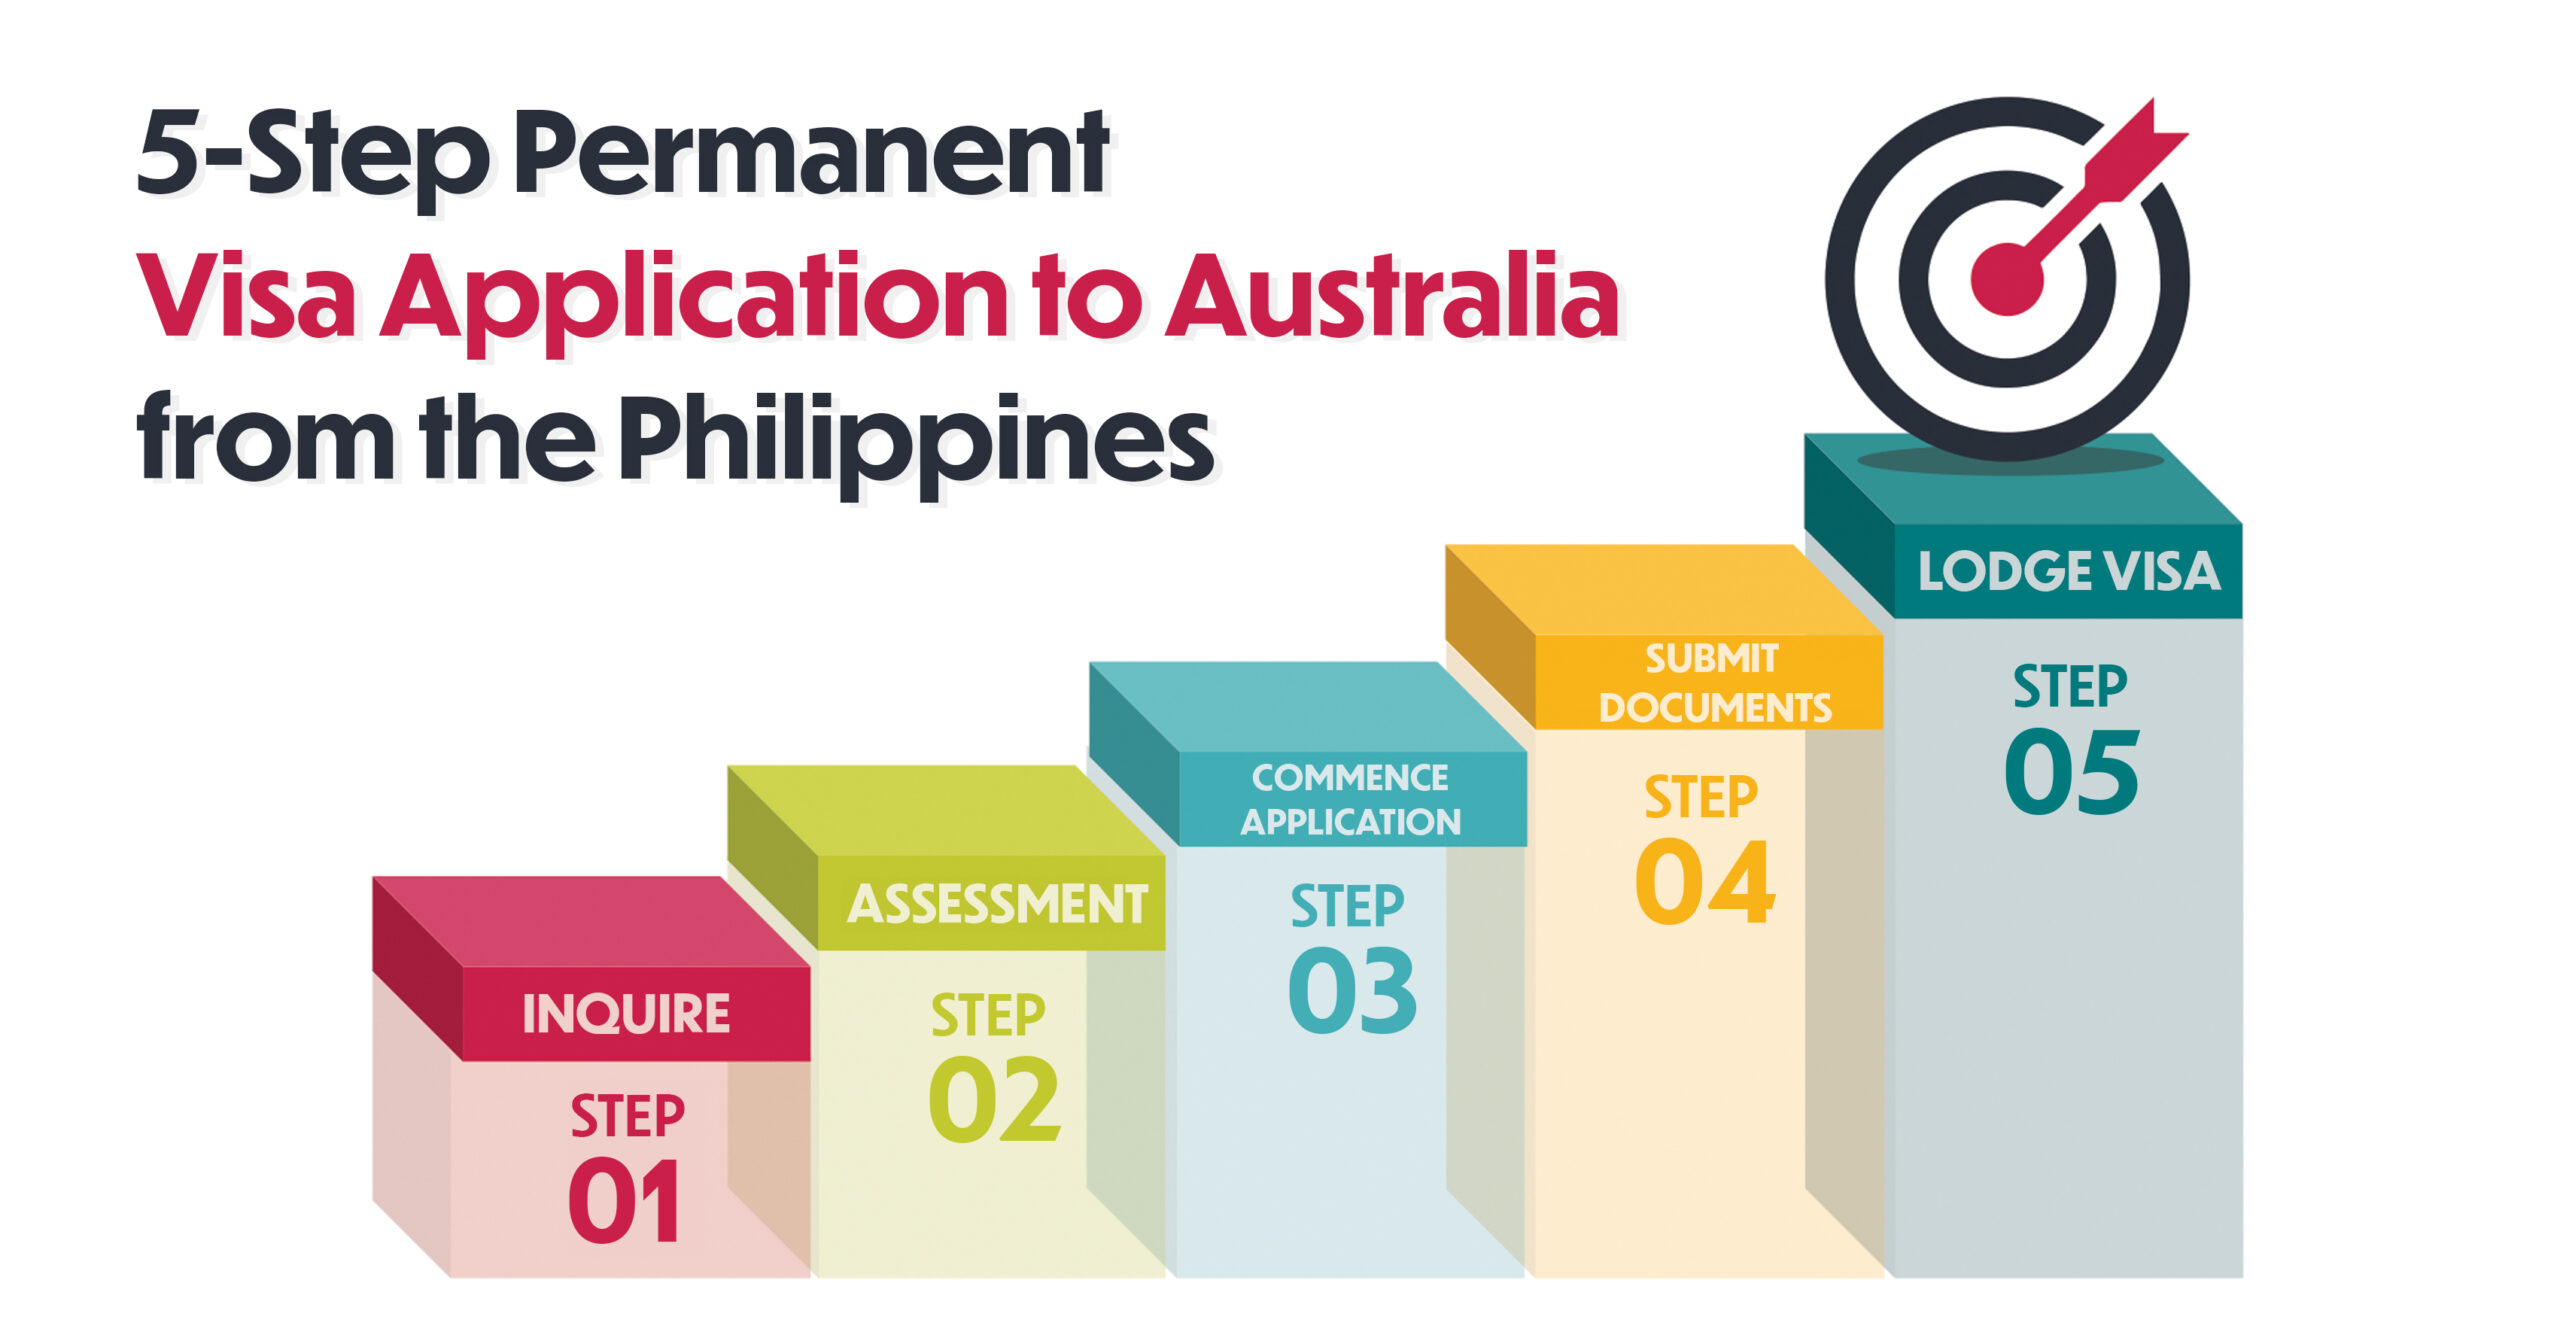 5-Step Permanent Visa Application to Australia